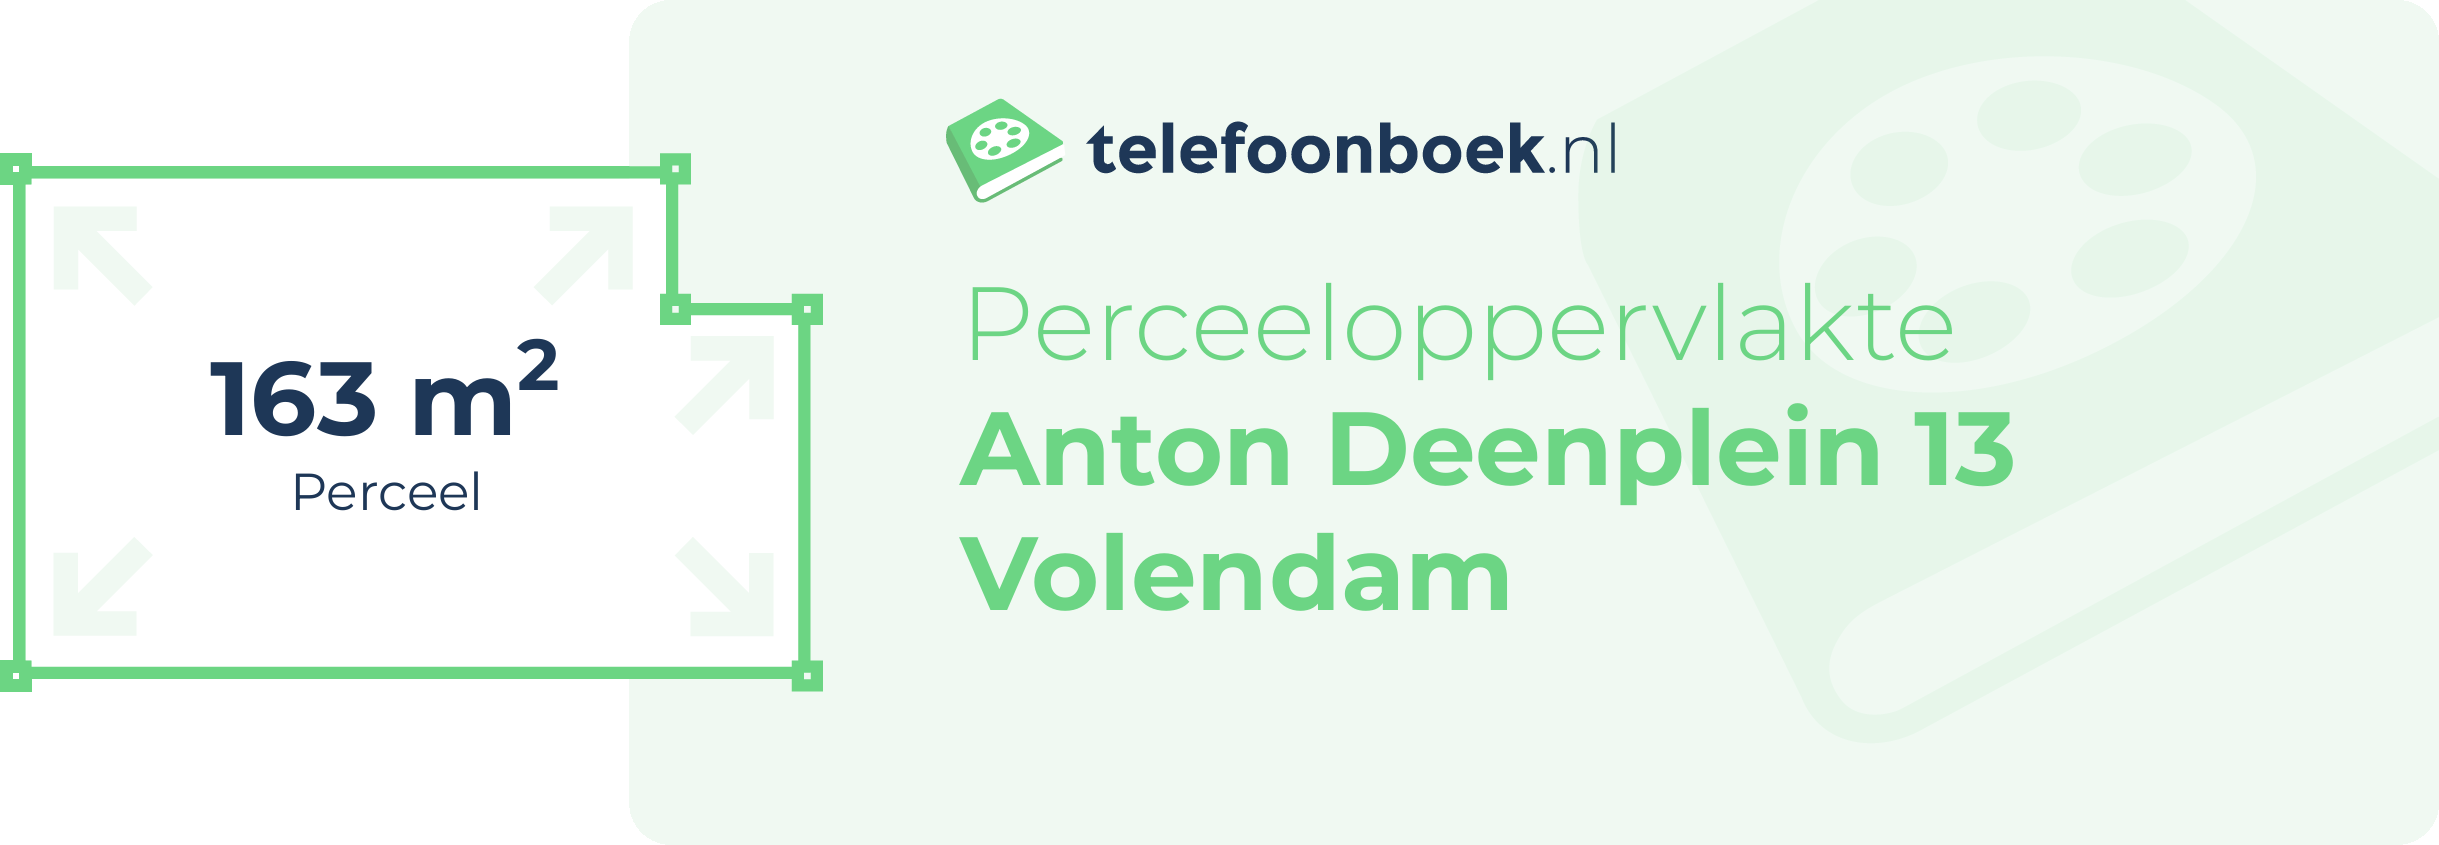 Perceeloppervlakte Anton Deenplein 13 Volendam